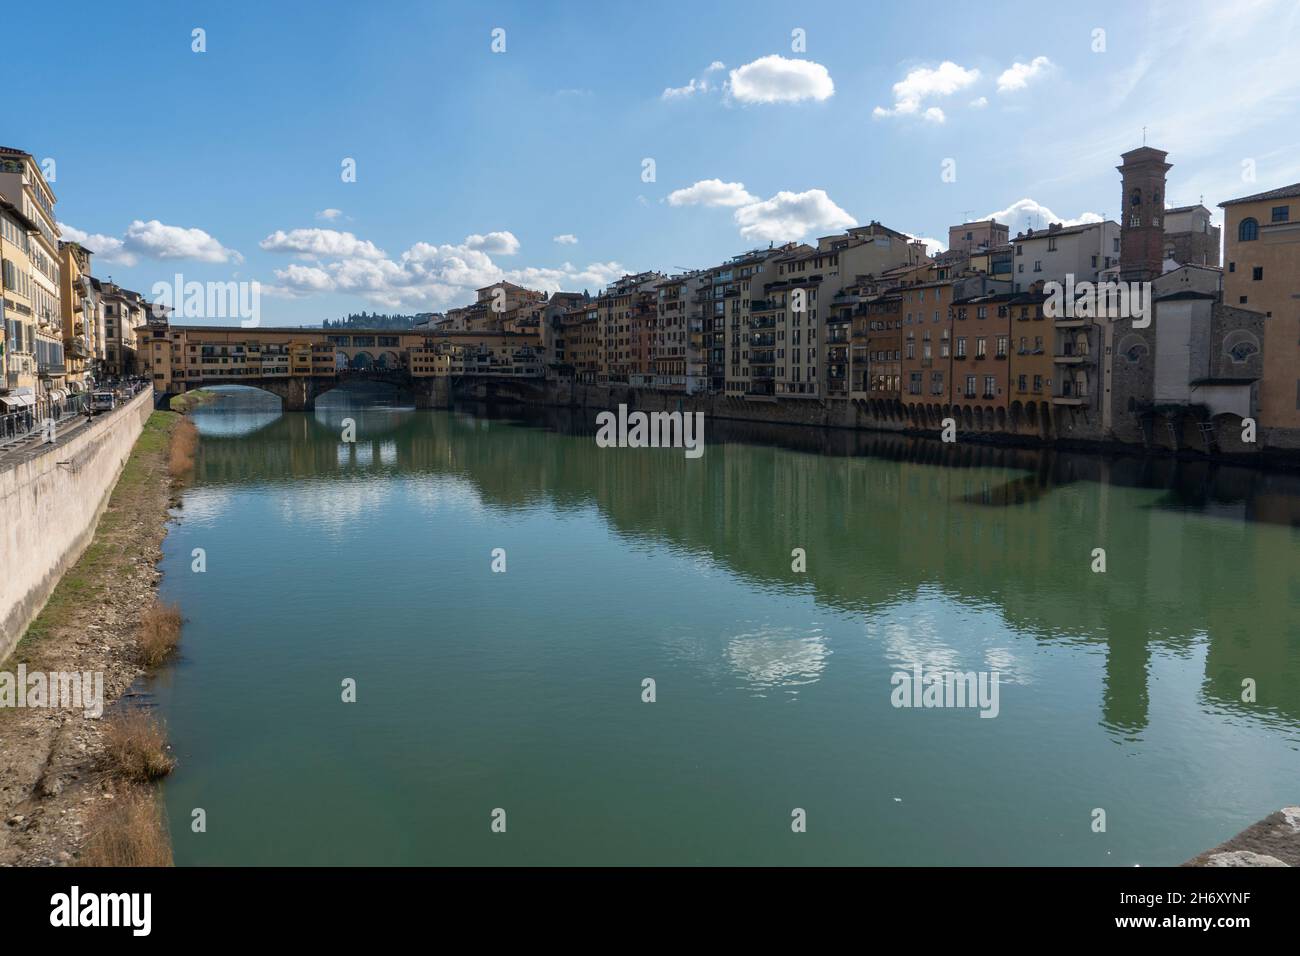 Florencia, Italia, febbraio 2020 Foto de stock